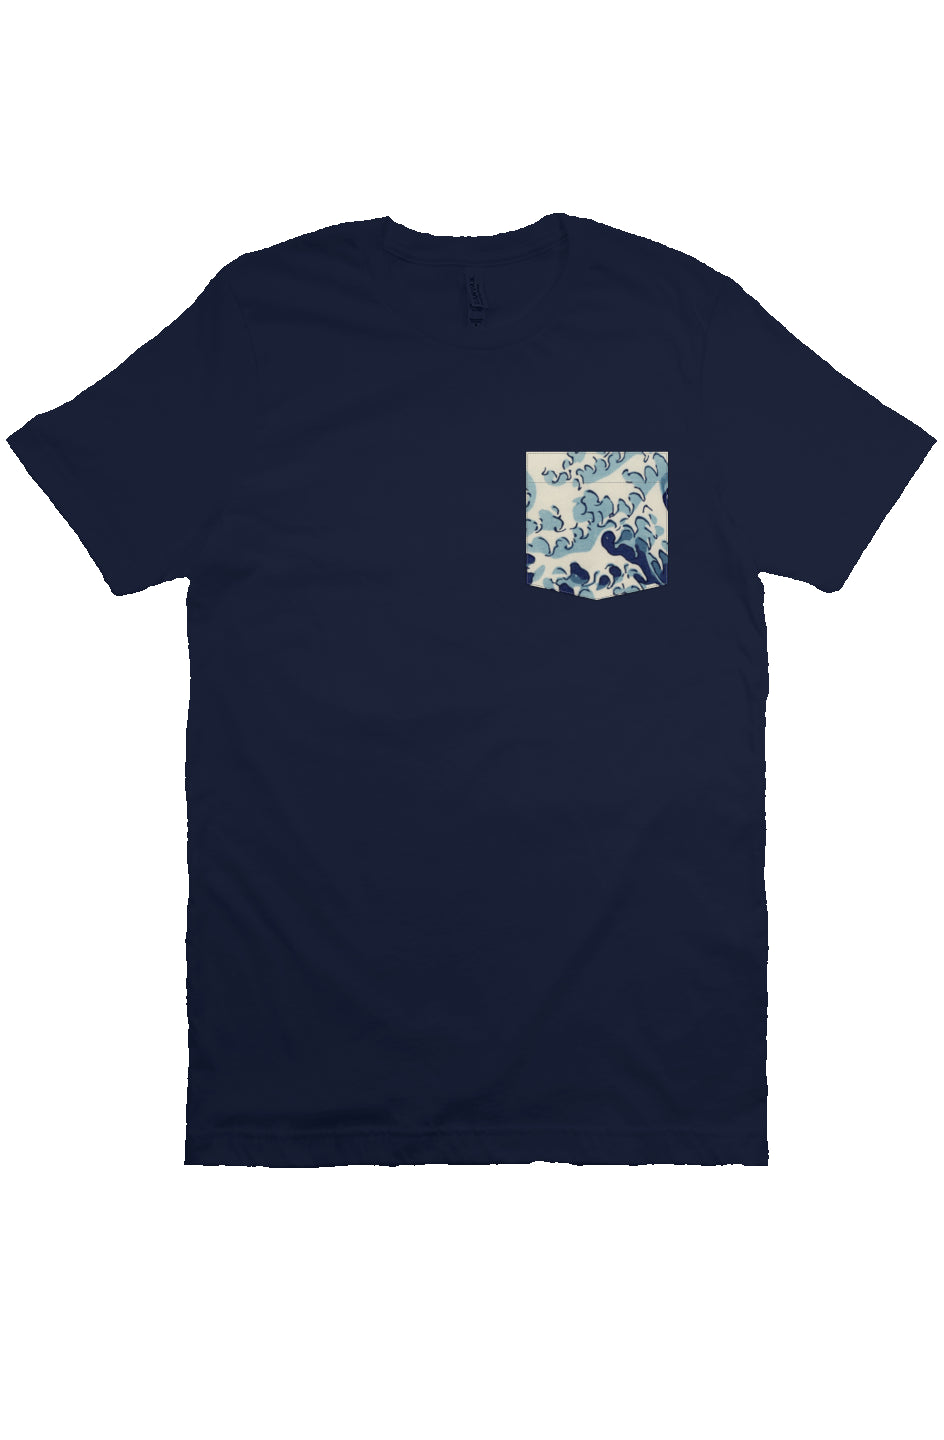 Odyssey T-Shirt = Big Wave = Deep Blue Sea